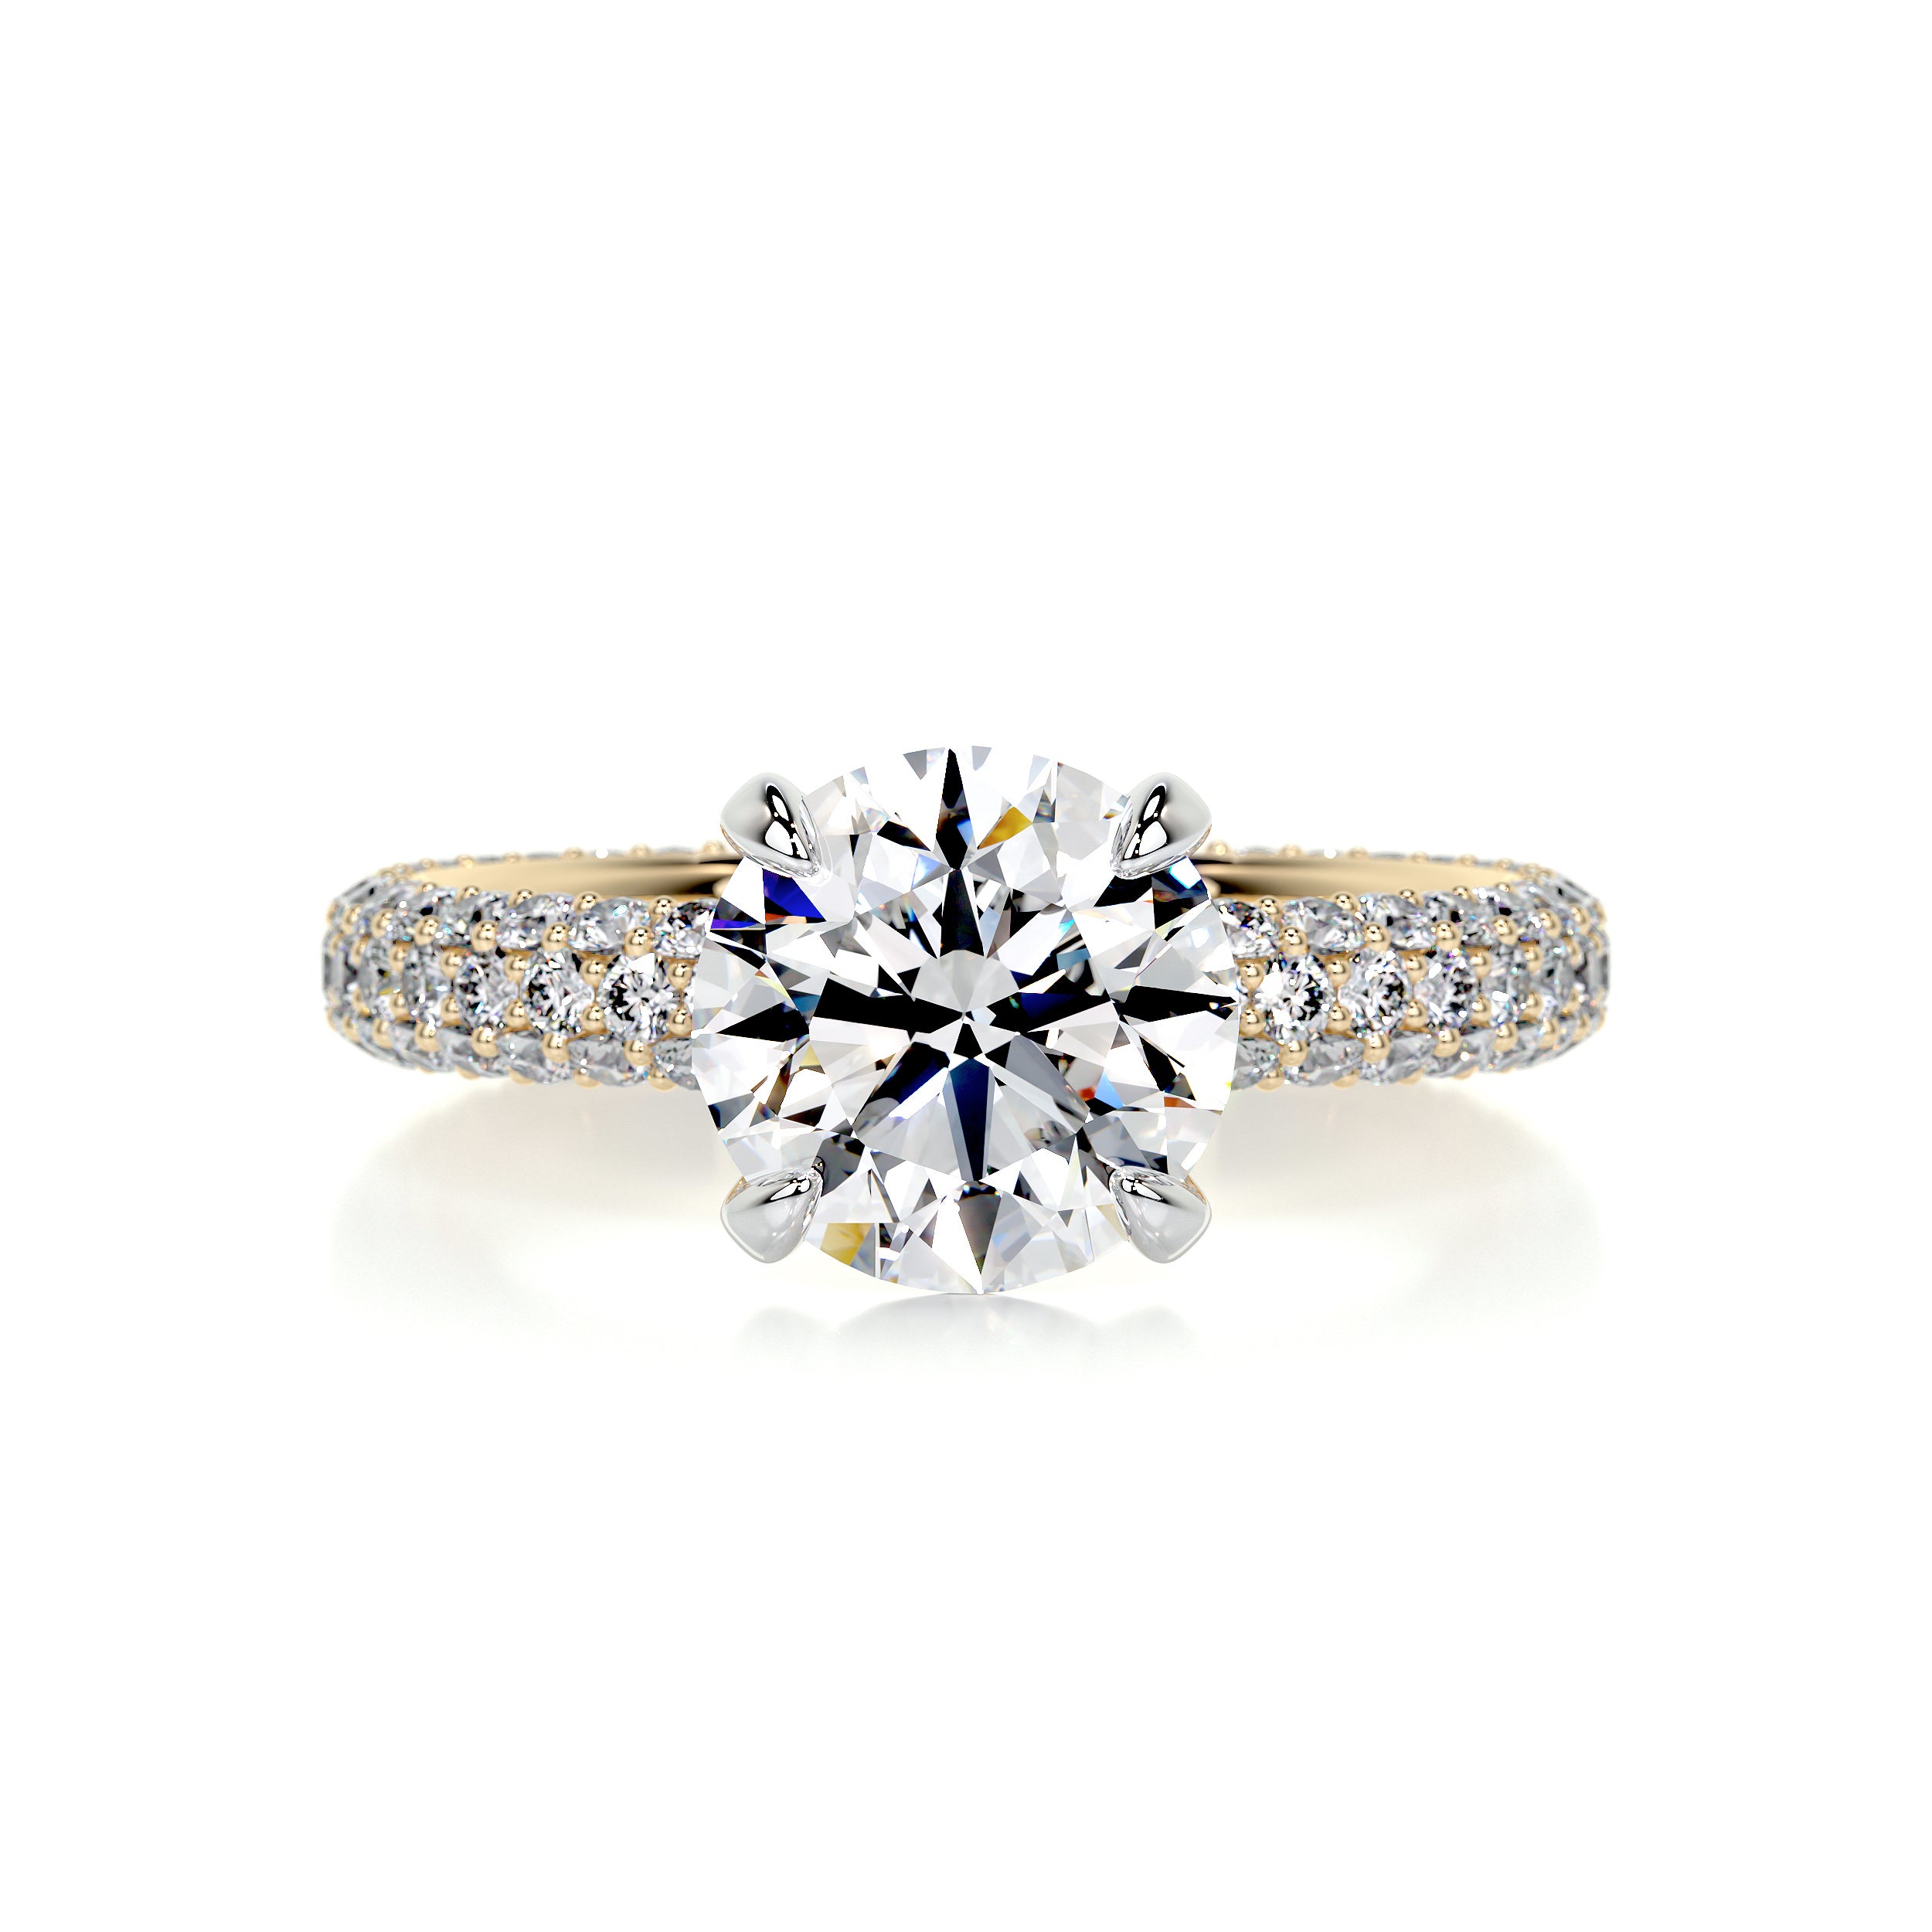 Charlotte Diamond Engagement Ring   (2.5 Carat) -18K Yellow Gold